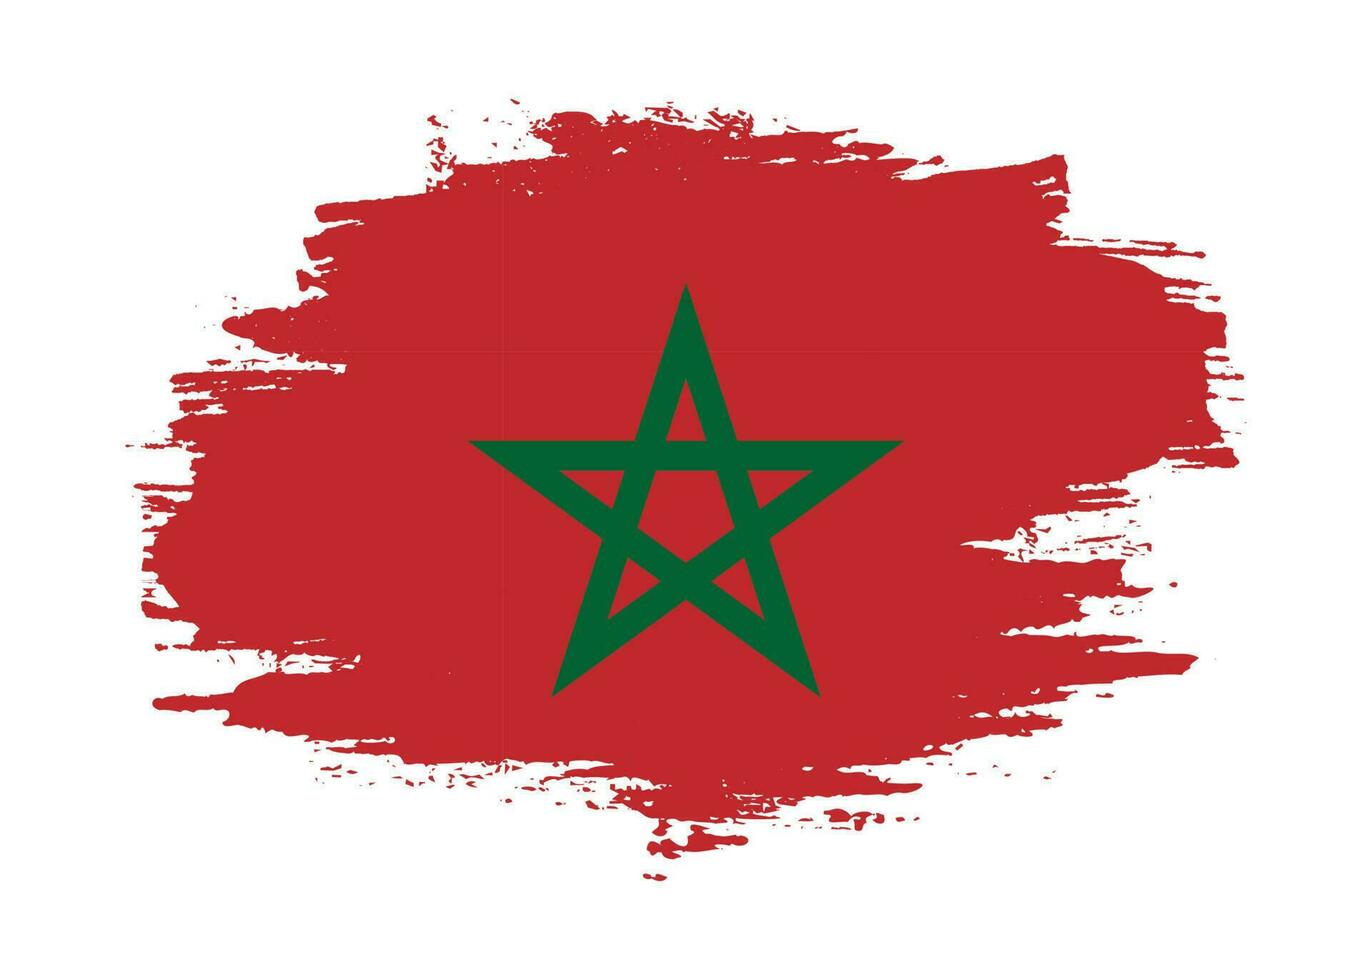 Abstract  Morocco grunge flag vector